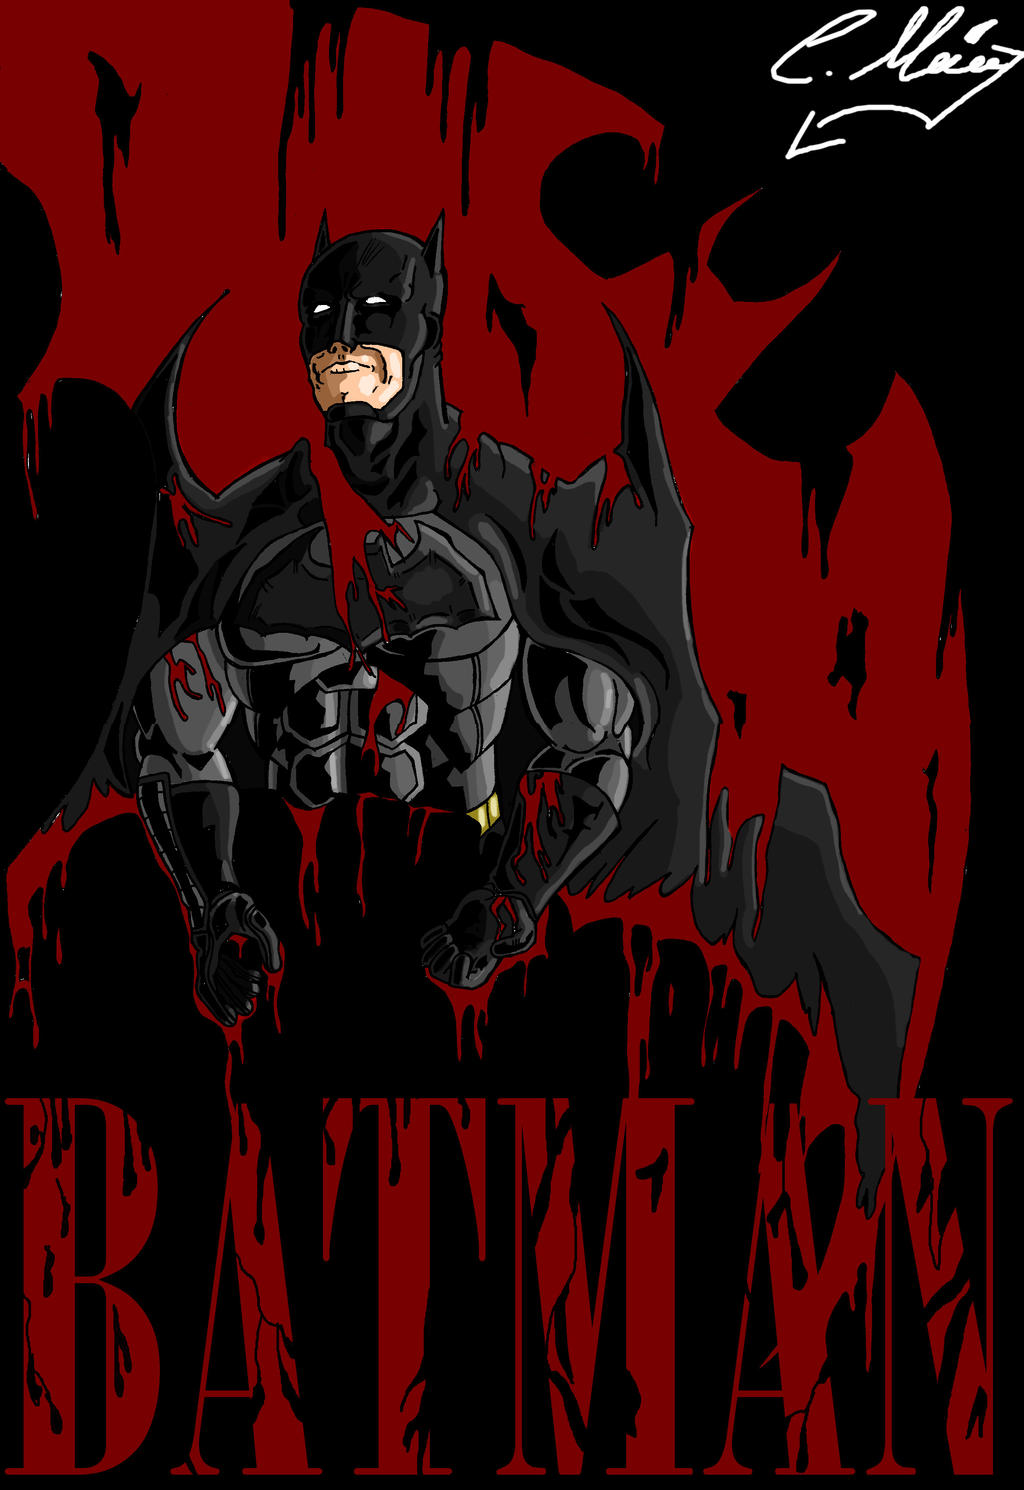 Bloody Batman by Frank-n-Groove on DeviantArt